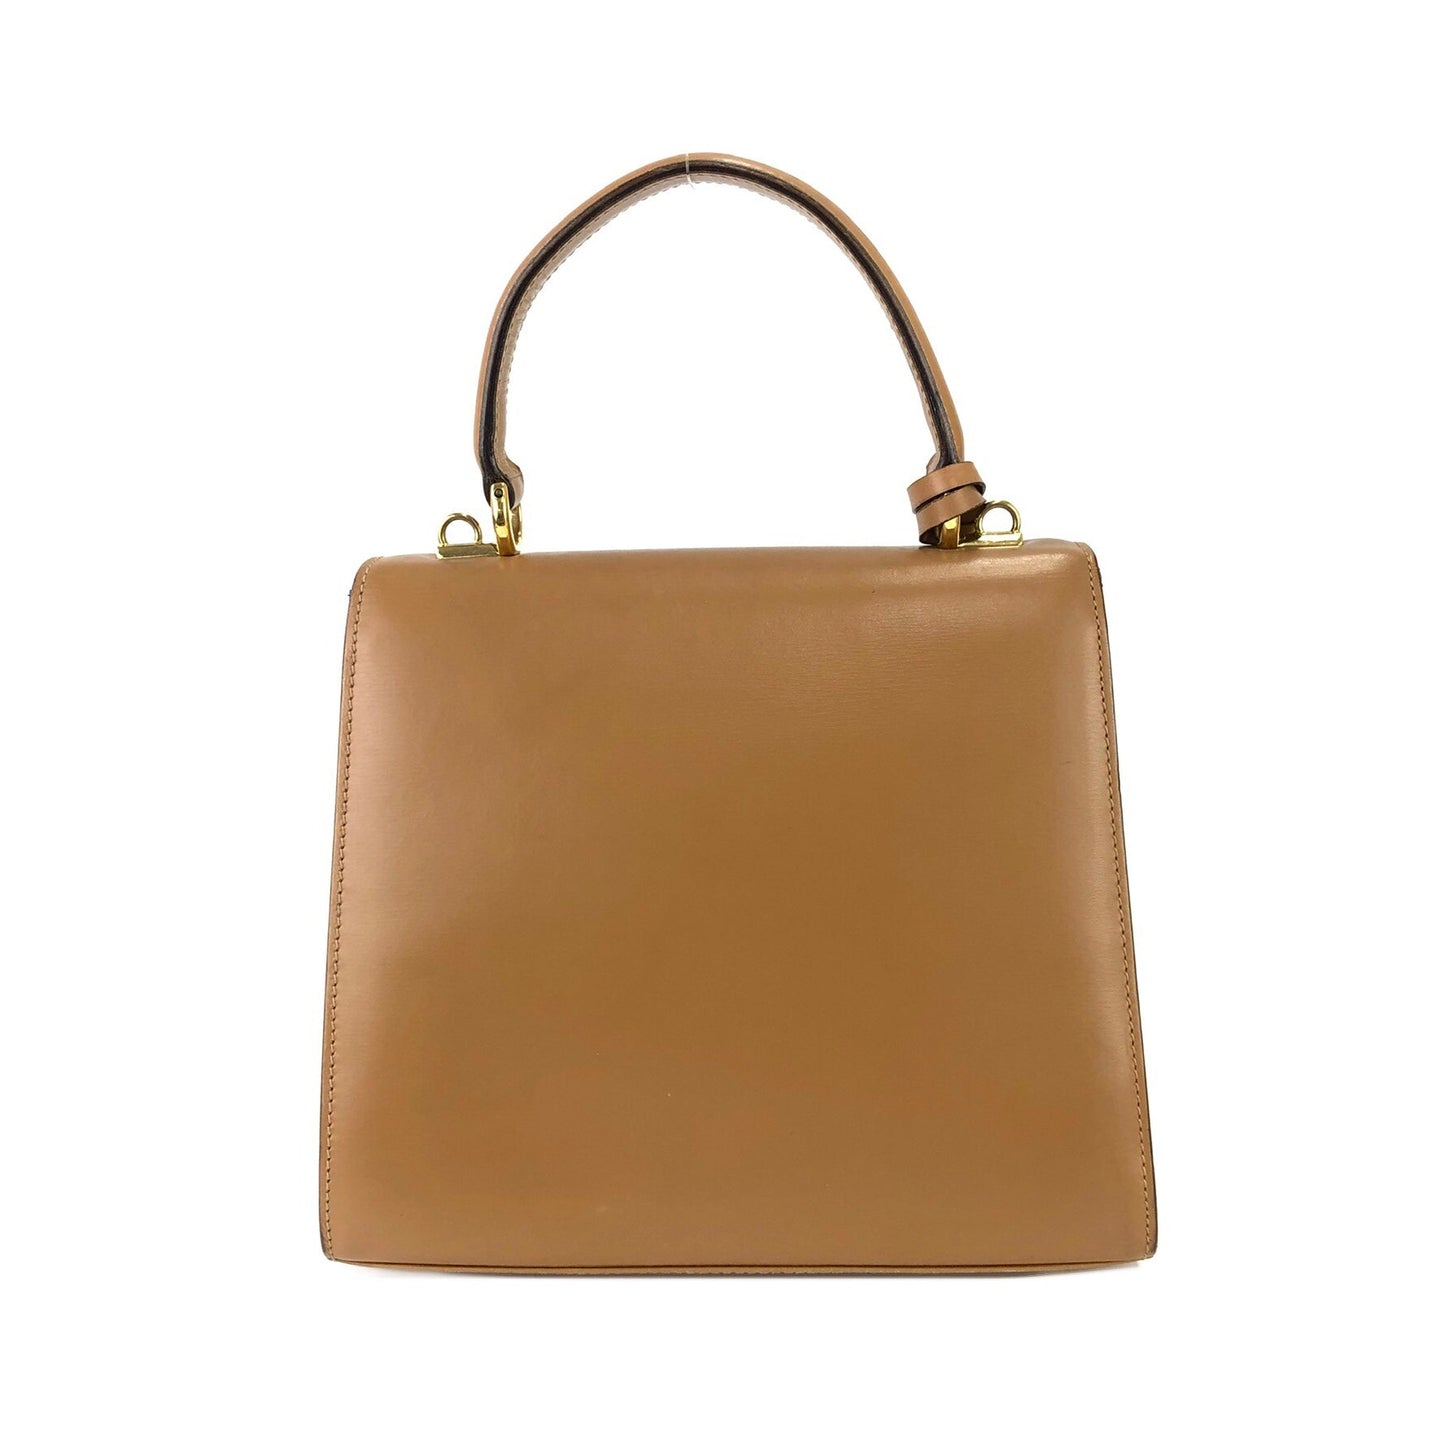 GUCCI Lady lock Top handle Leather Handbag small Shoulder bag Camel Old gucci Vintage yffr8b